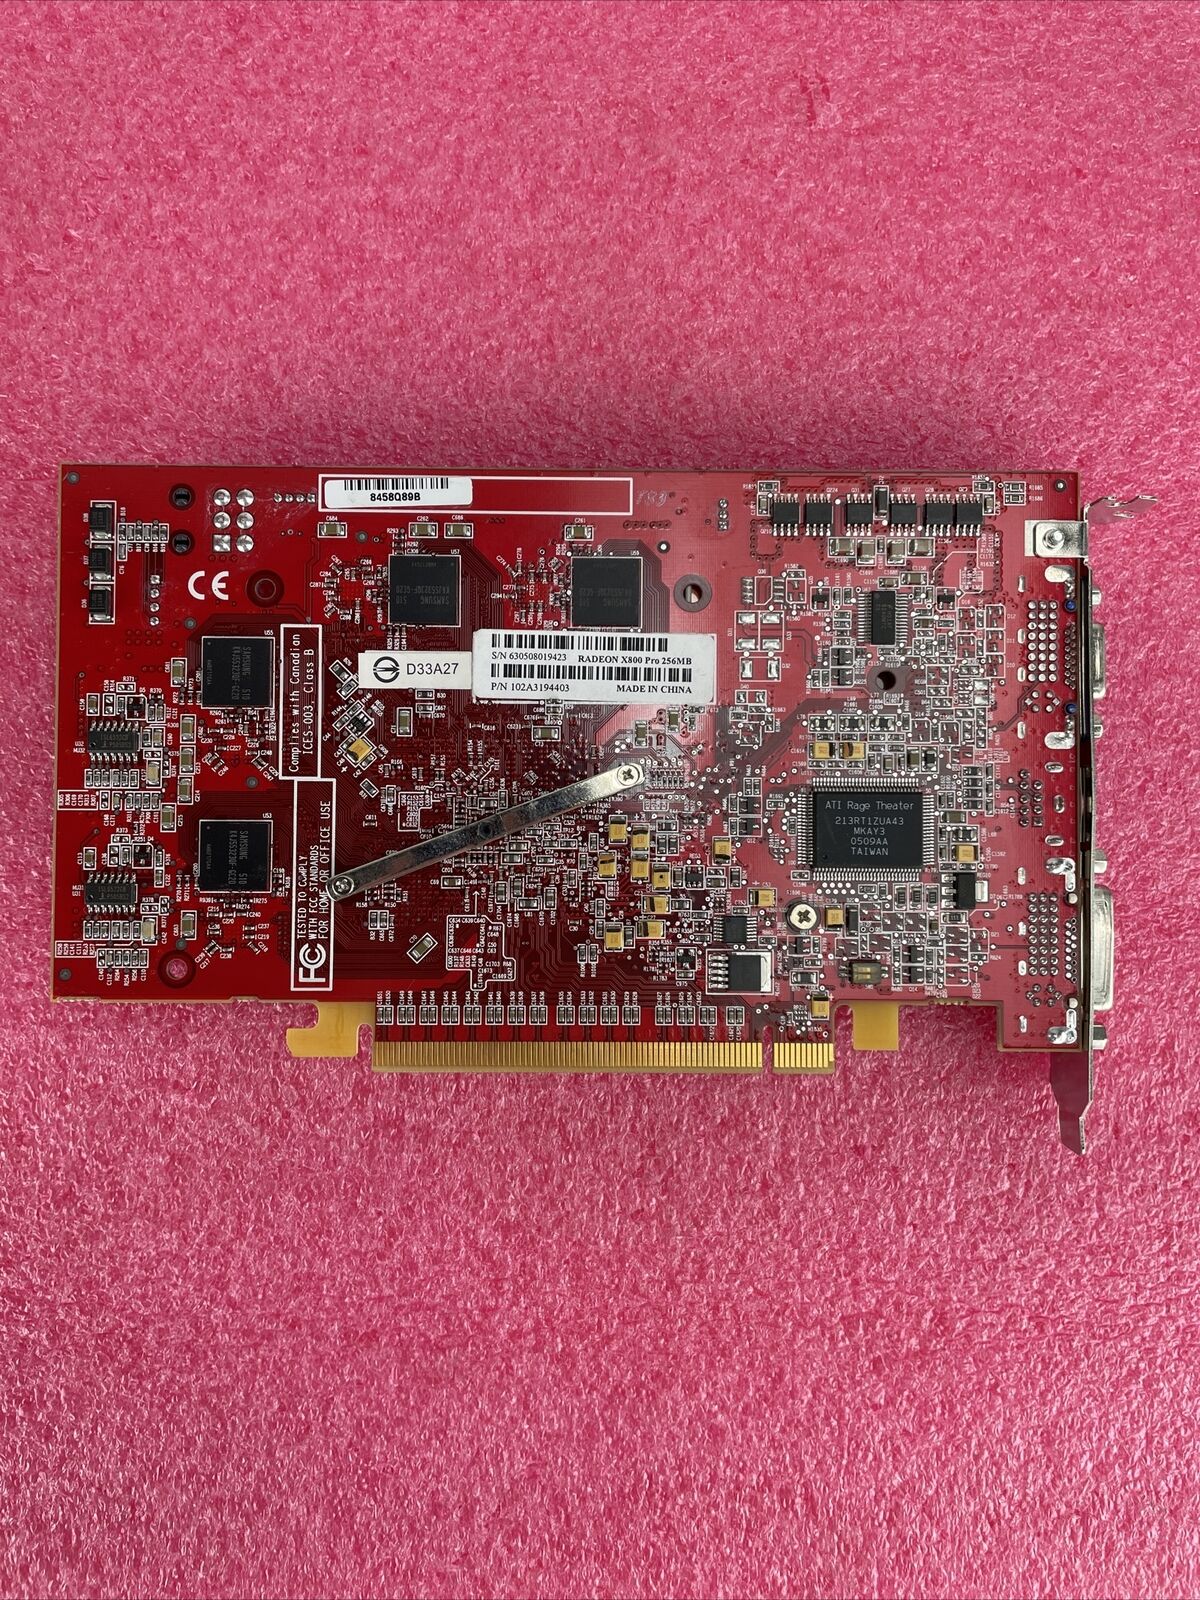 ATI Radeon X800 Pro 256MB PCIe Graphics Card